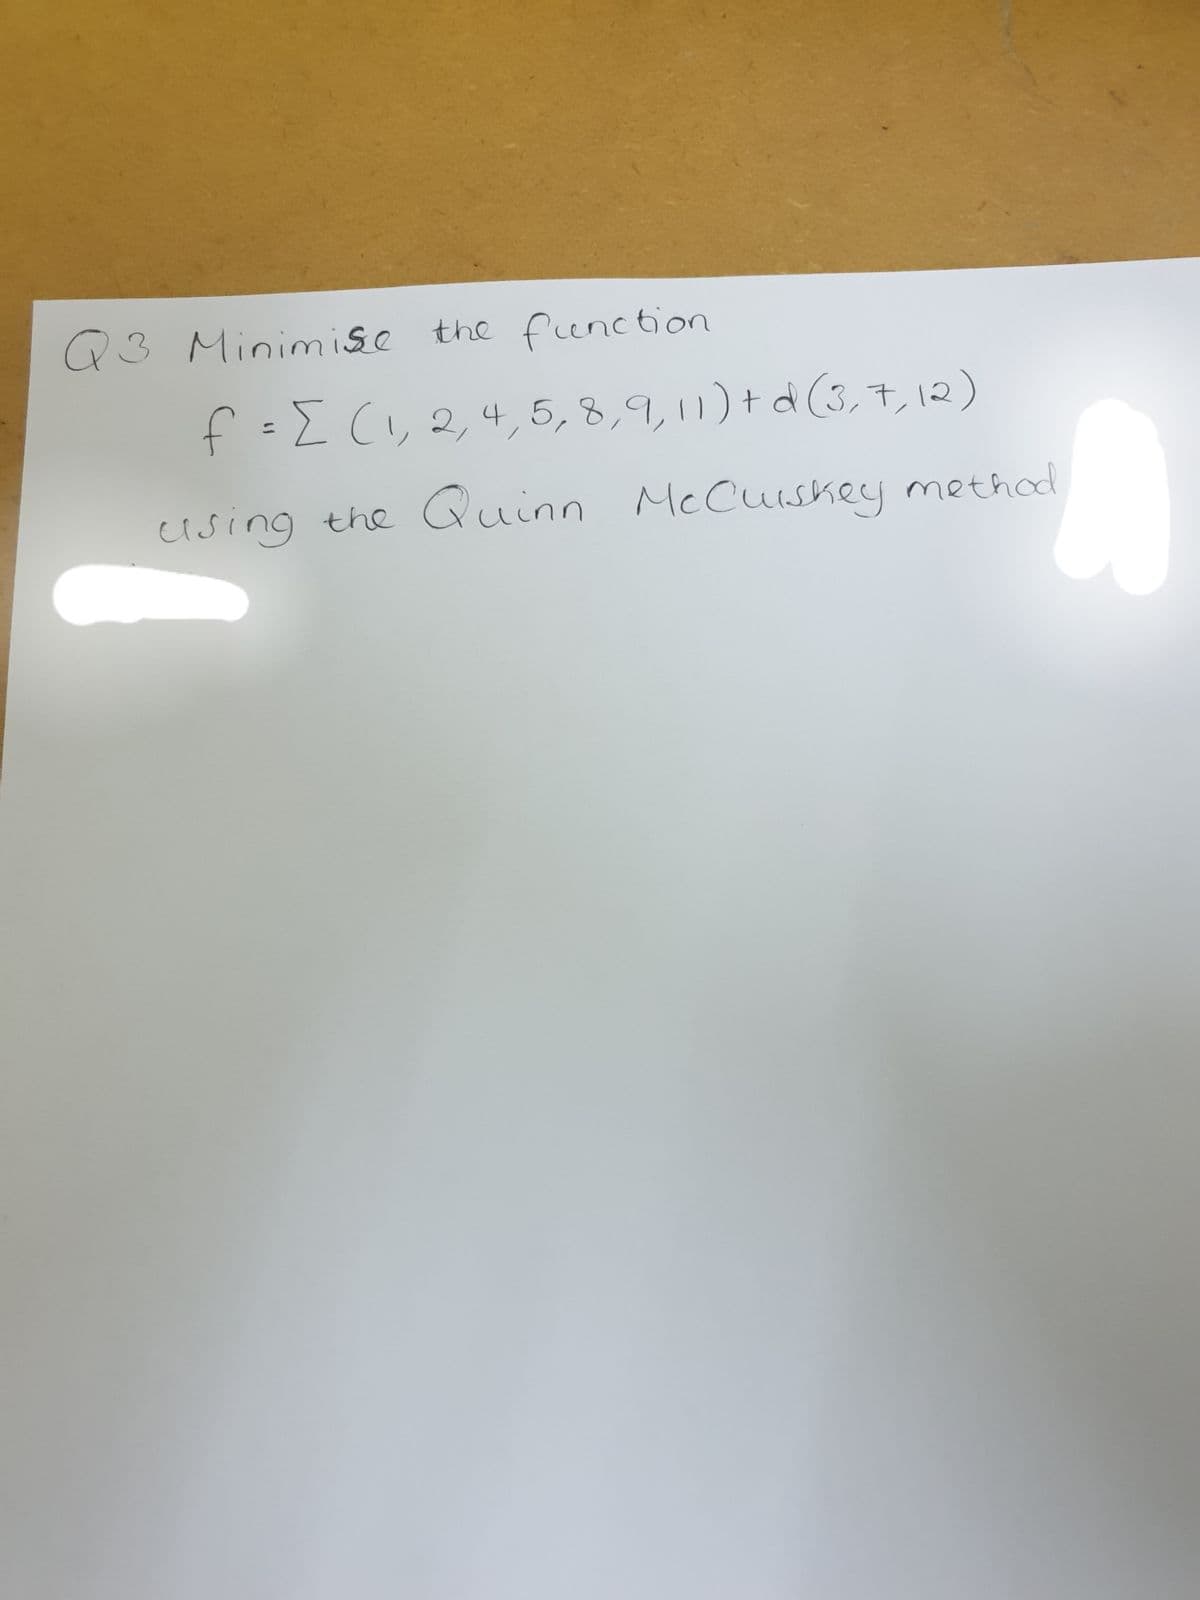 Q3Minimise the fenction
f :[(,2,4,5, 8,9,11) † d (3, 7, 12)
%3D
cising the Quinn
nn McCuskey
McCuiskey method
